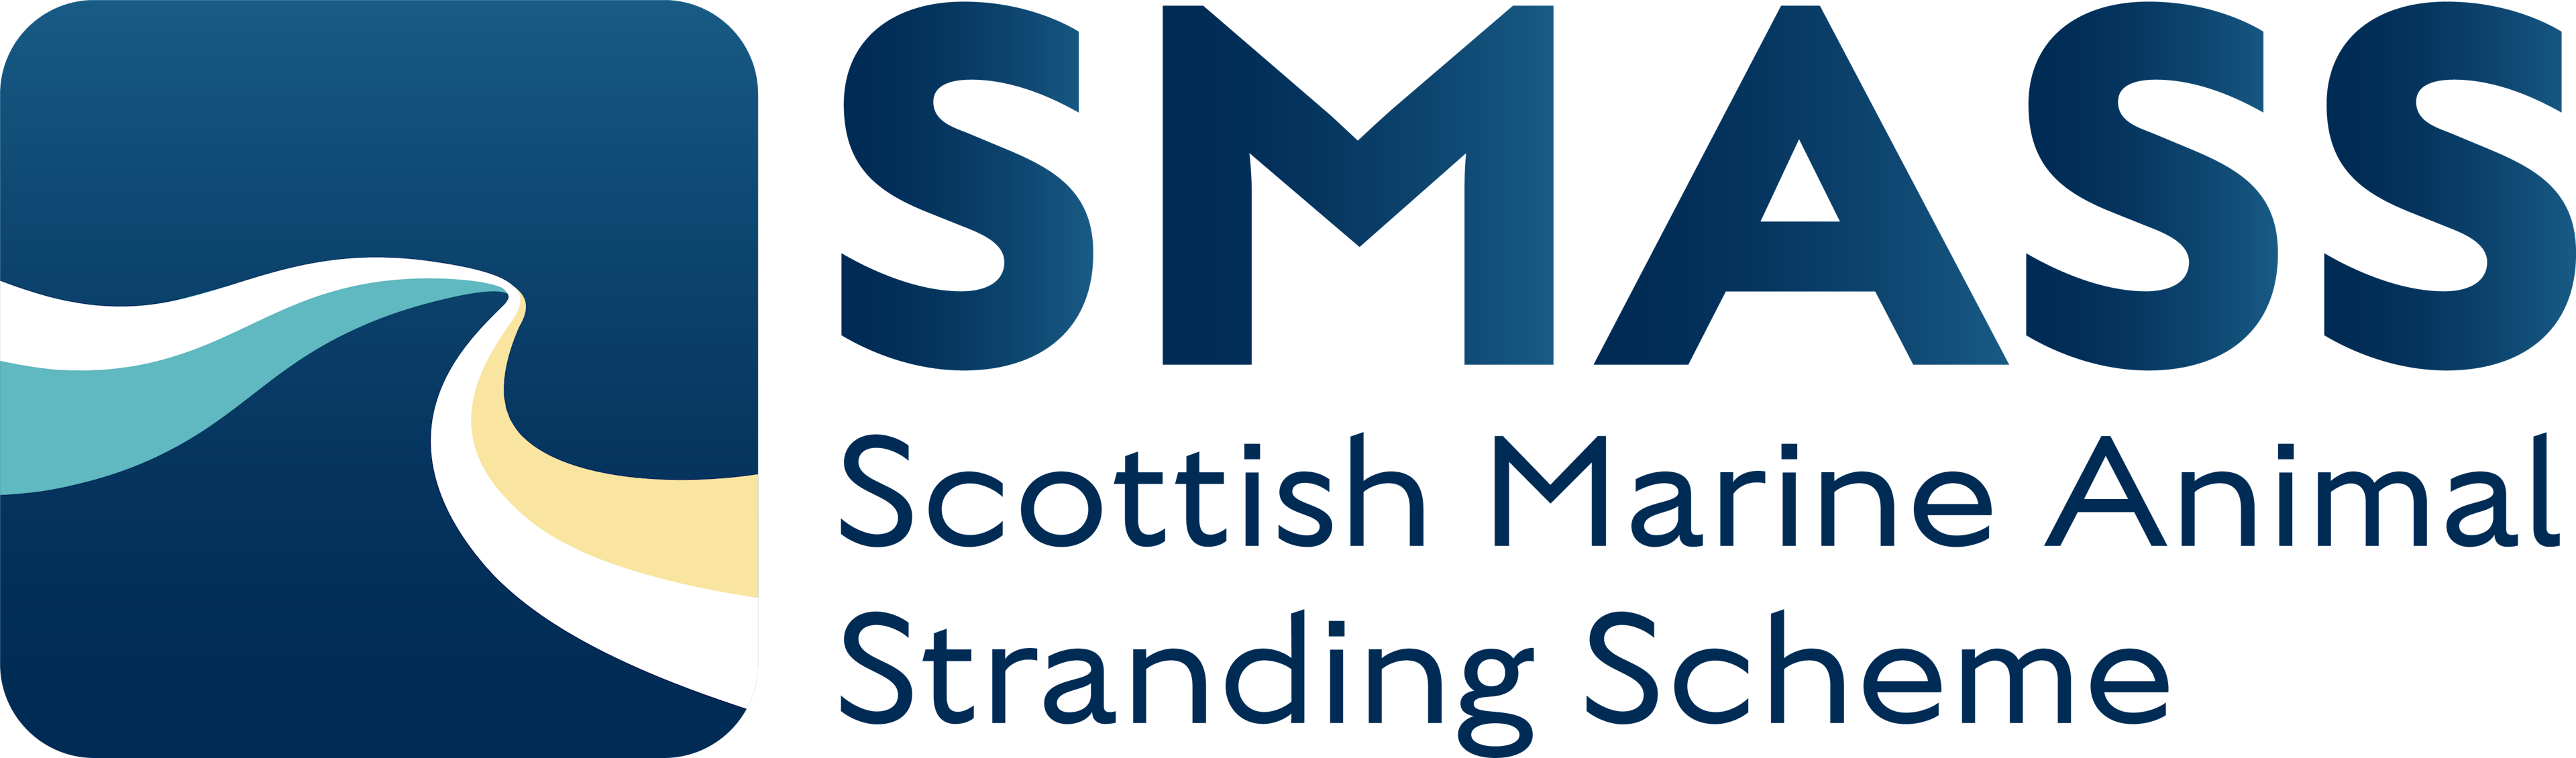 SMASS logo